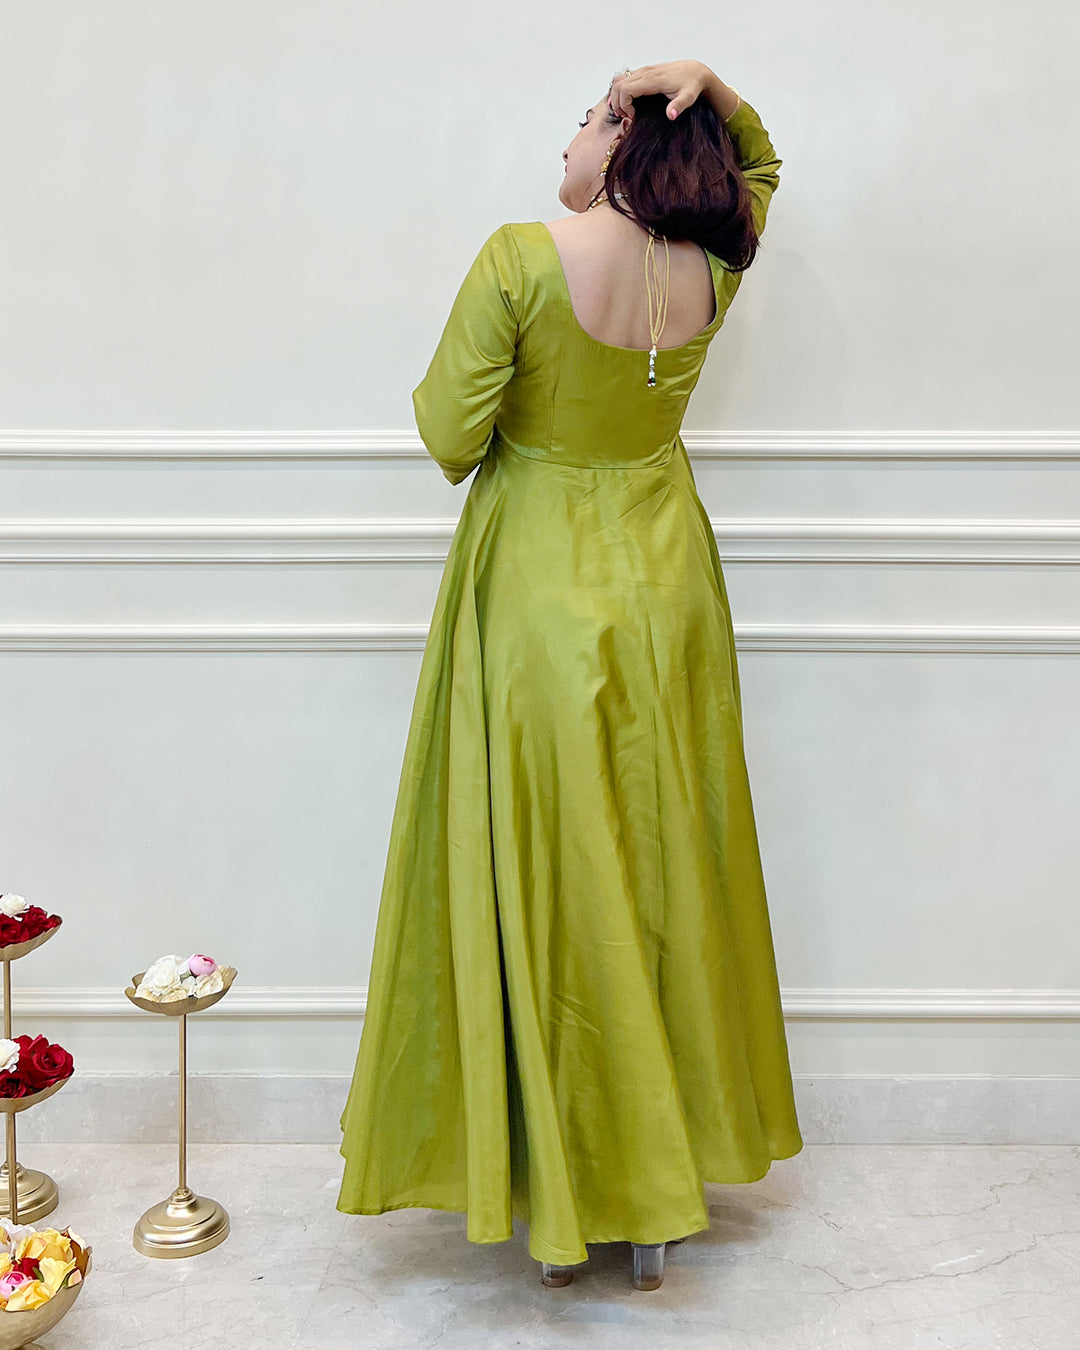 Sap Green Swirl-Worthy Long Dress